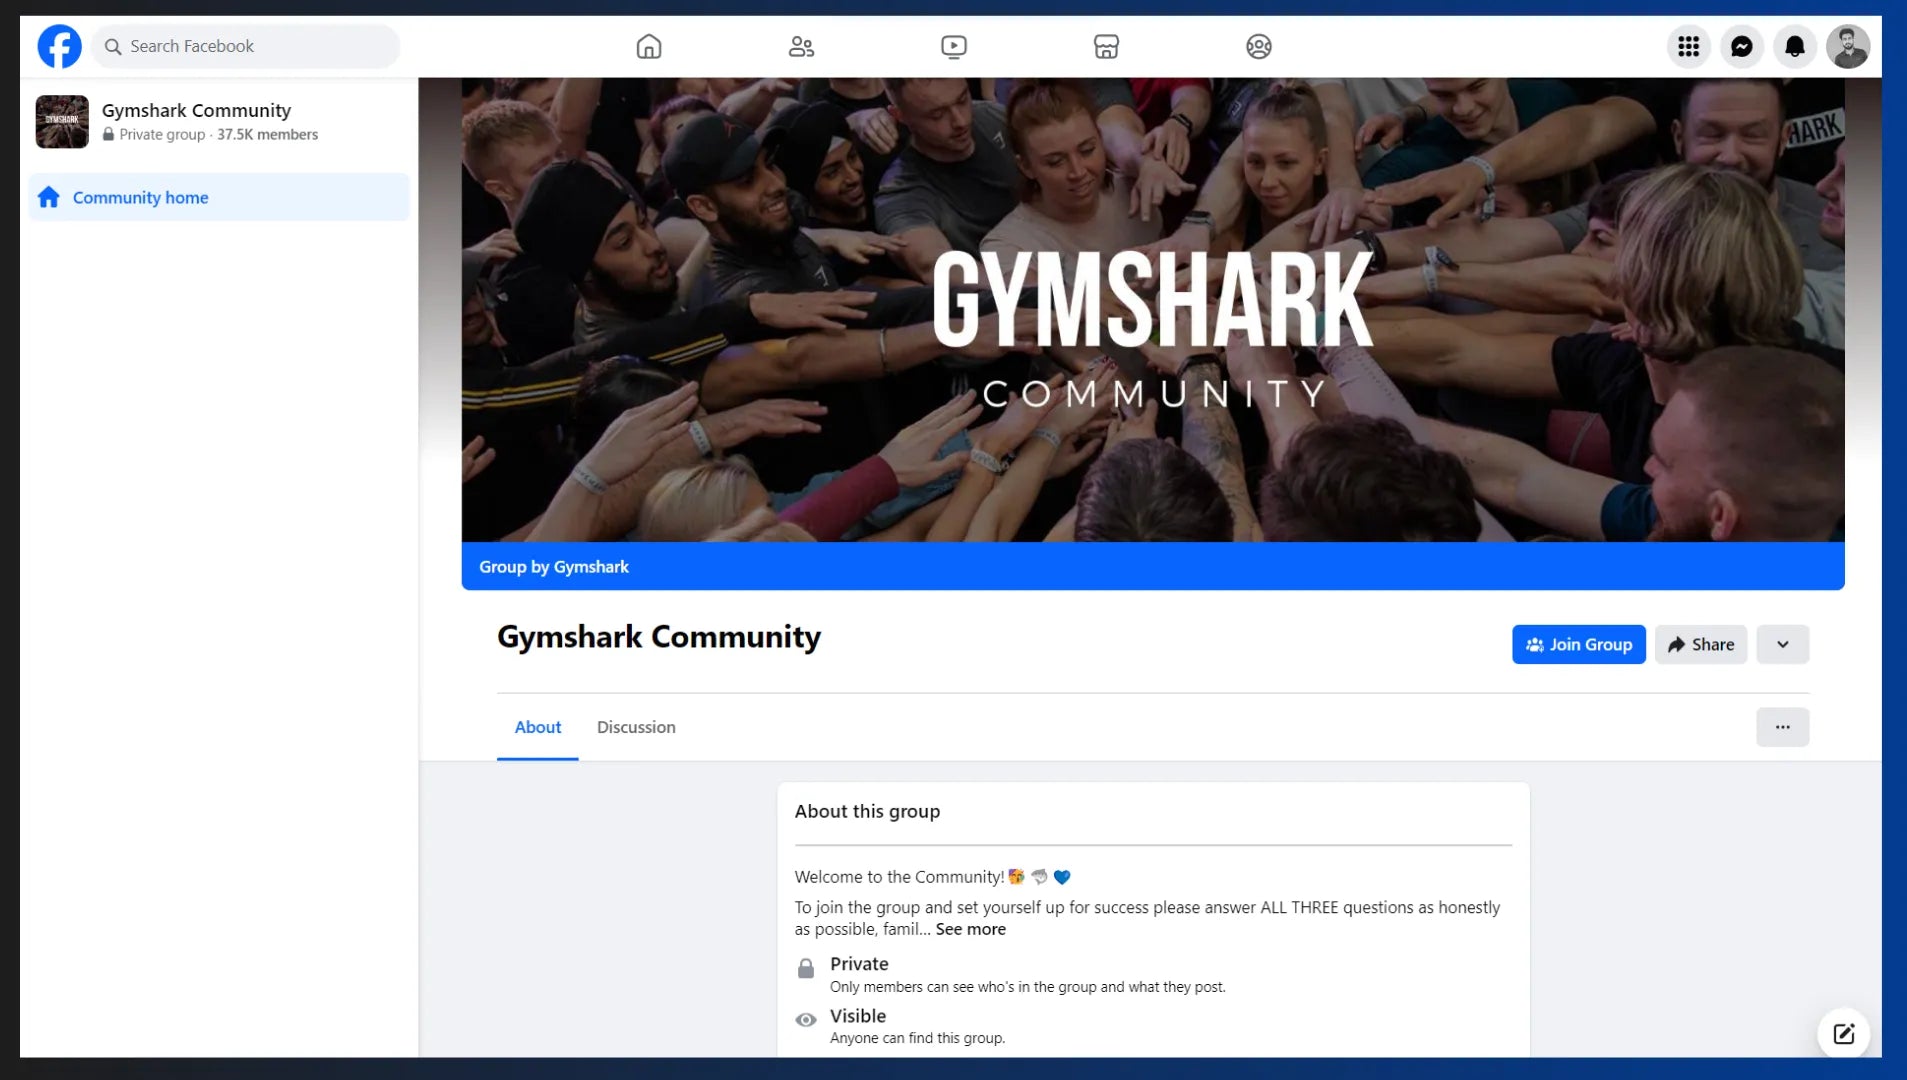 Gymshark’s Facebook community